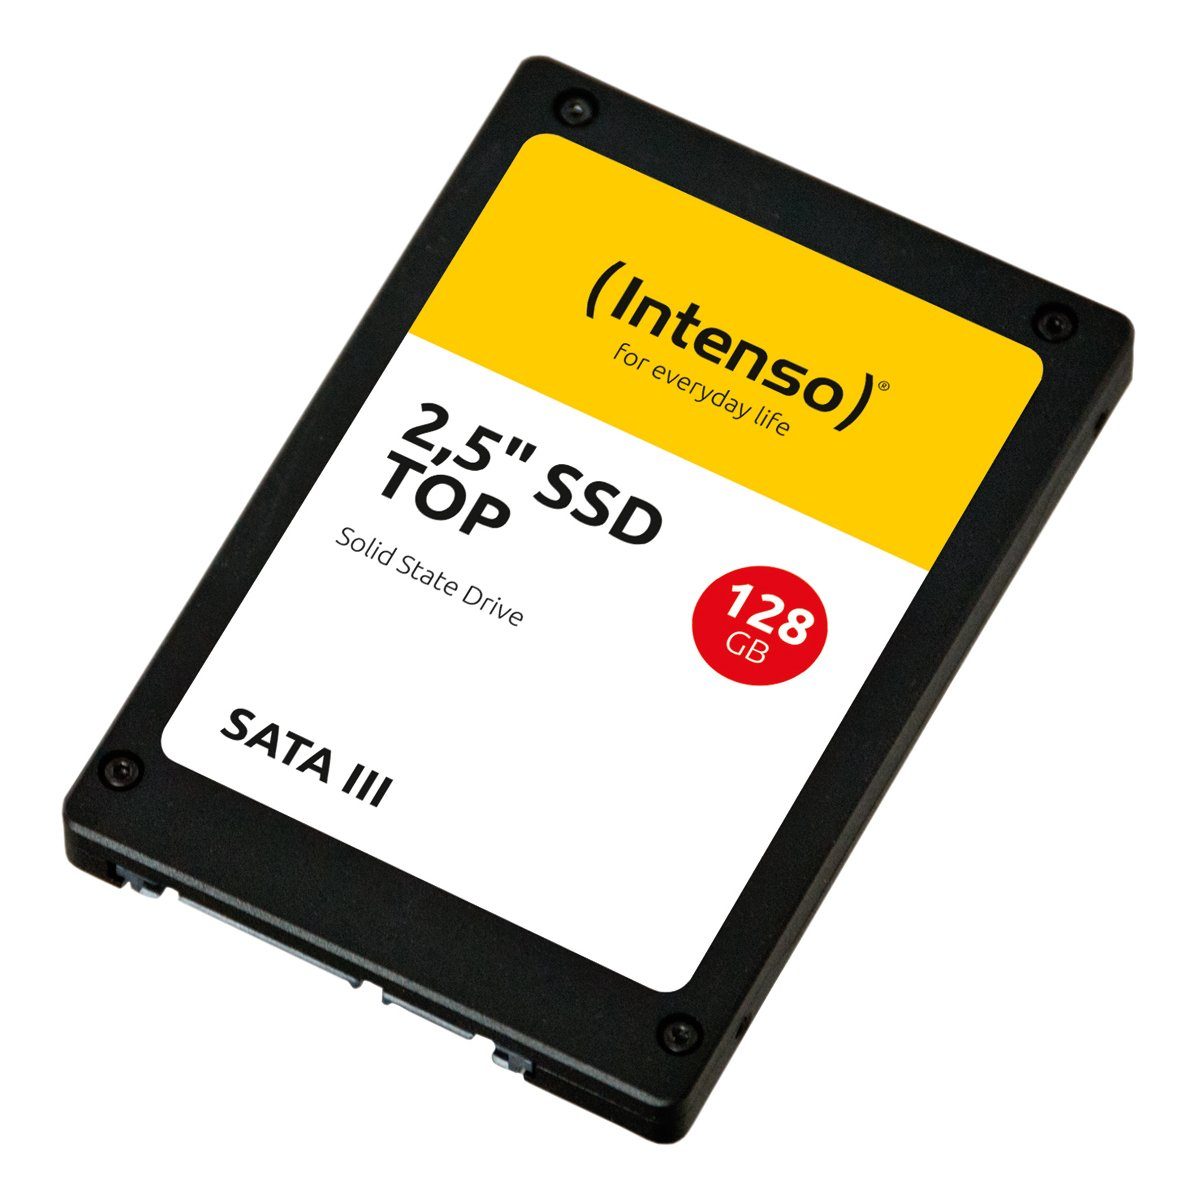 Top SSD 128GB Intenso SATA3 Intenso SSD-Festplatte